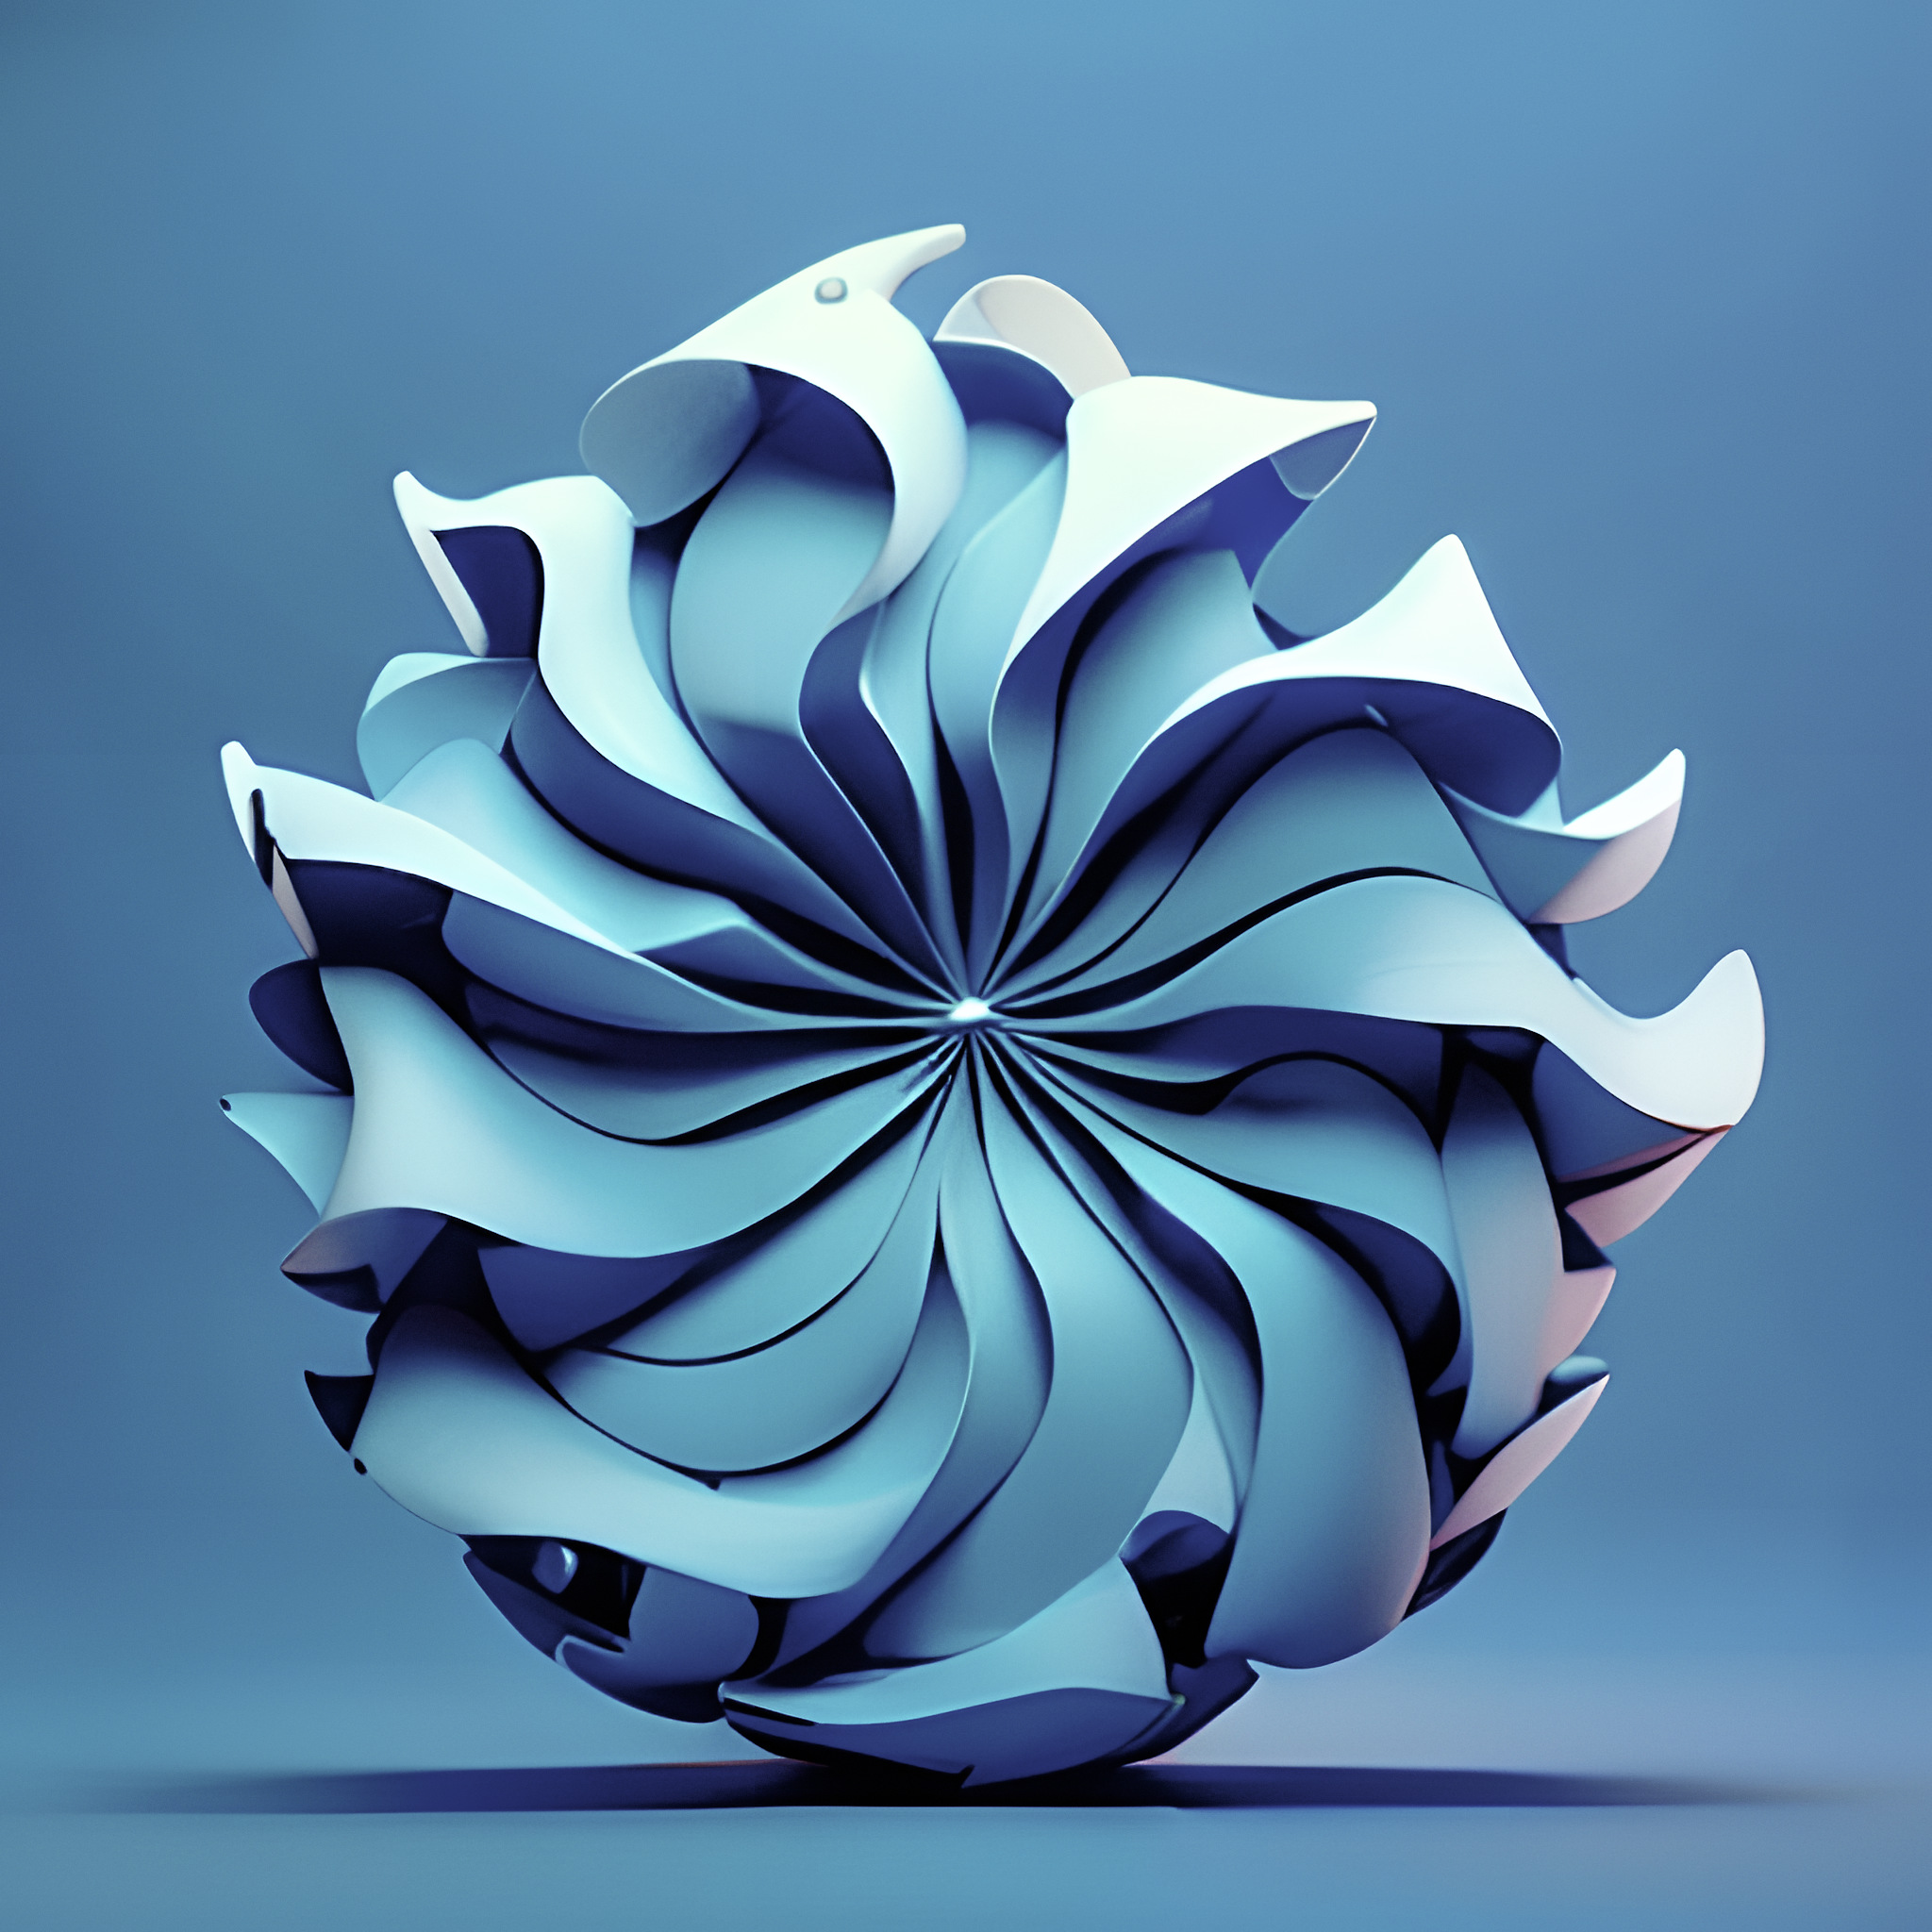 Minimalistic paper flower design